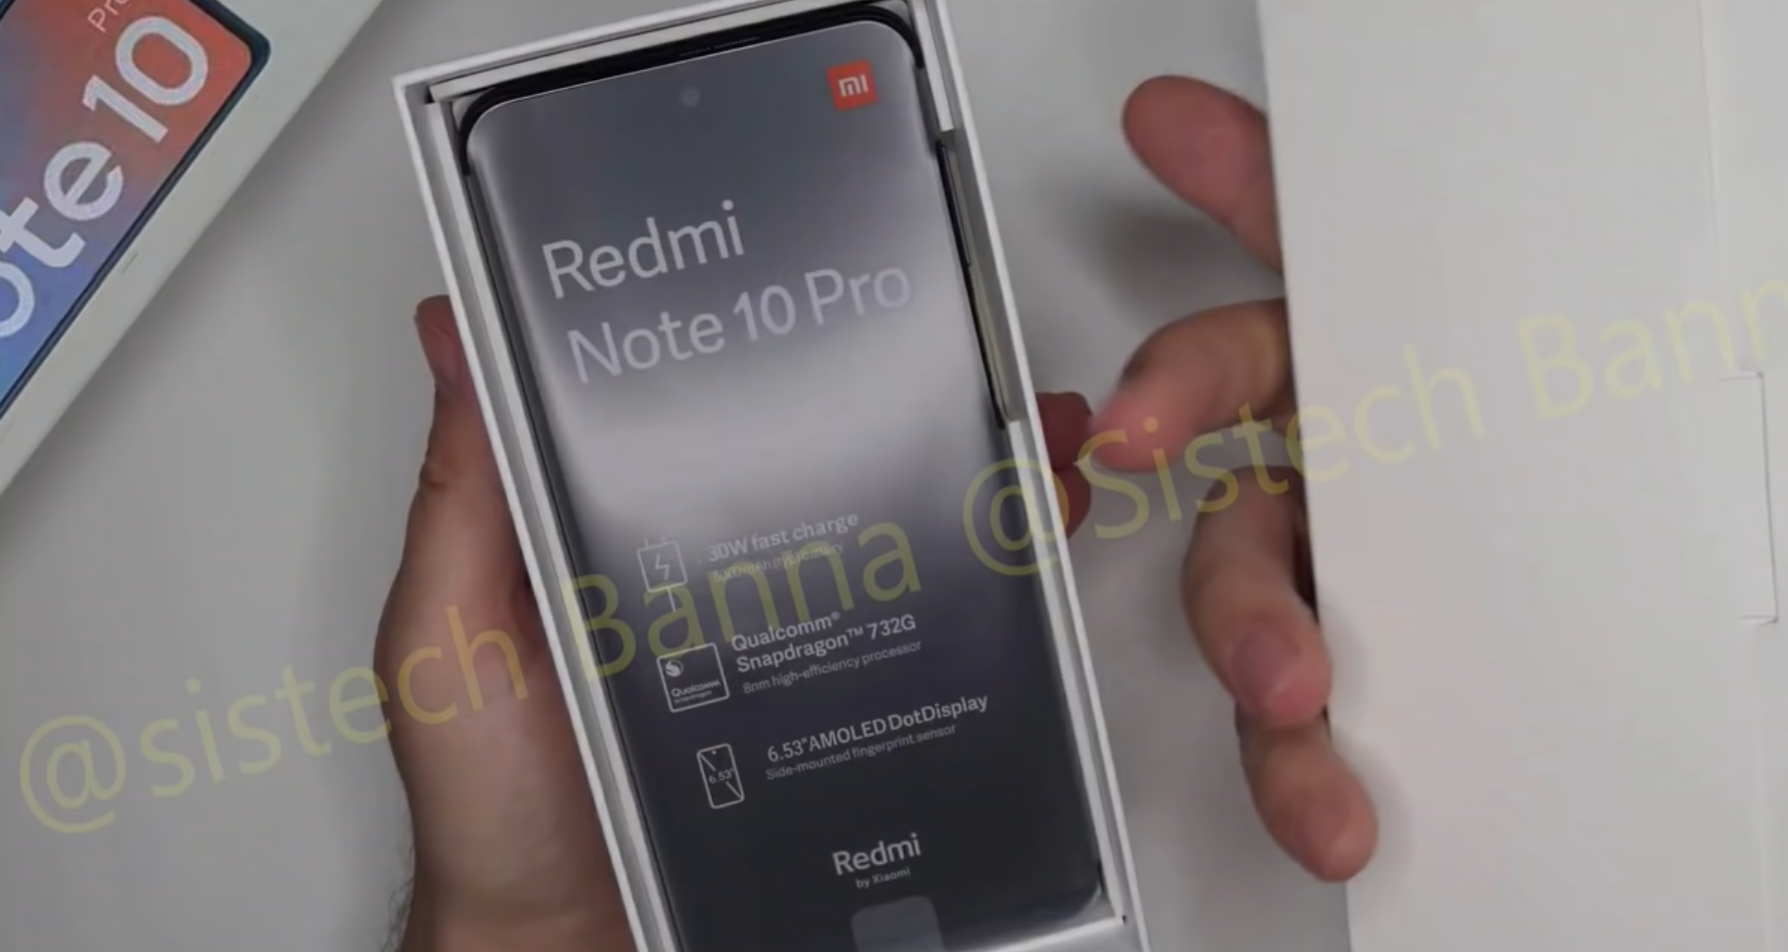 Redmi Note 10 Pro key specs